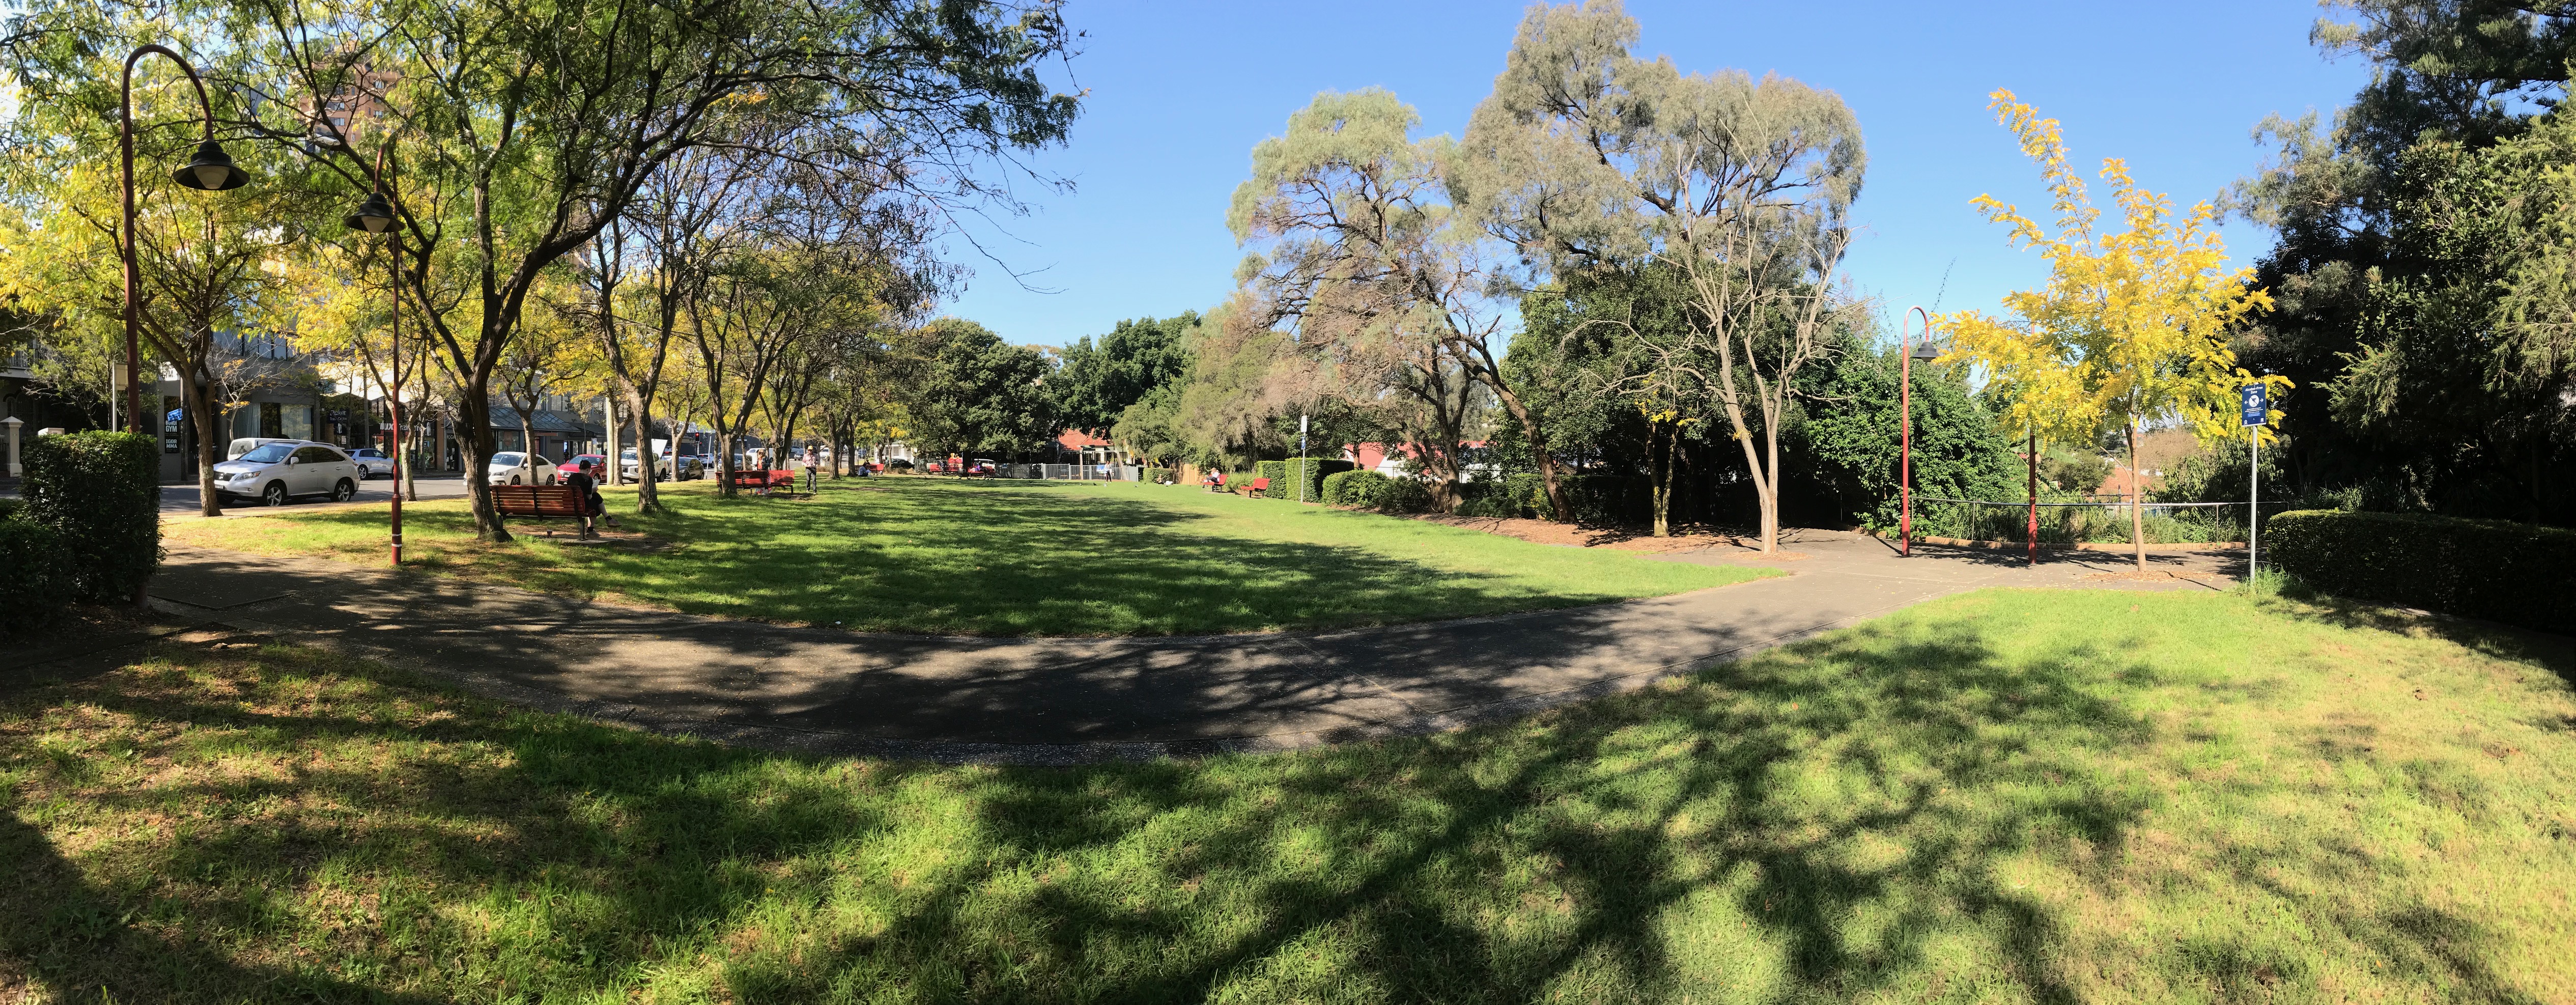 Clemenston Park 